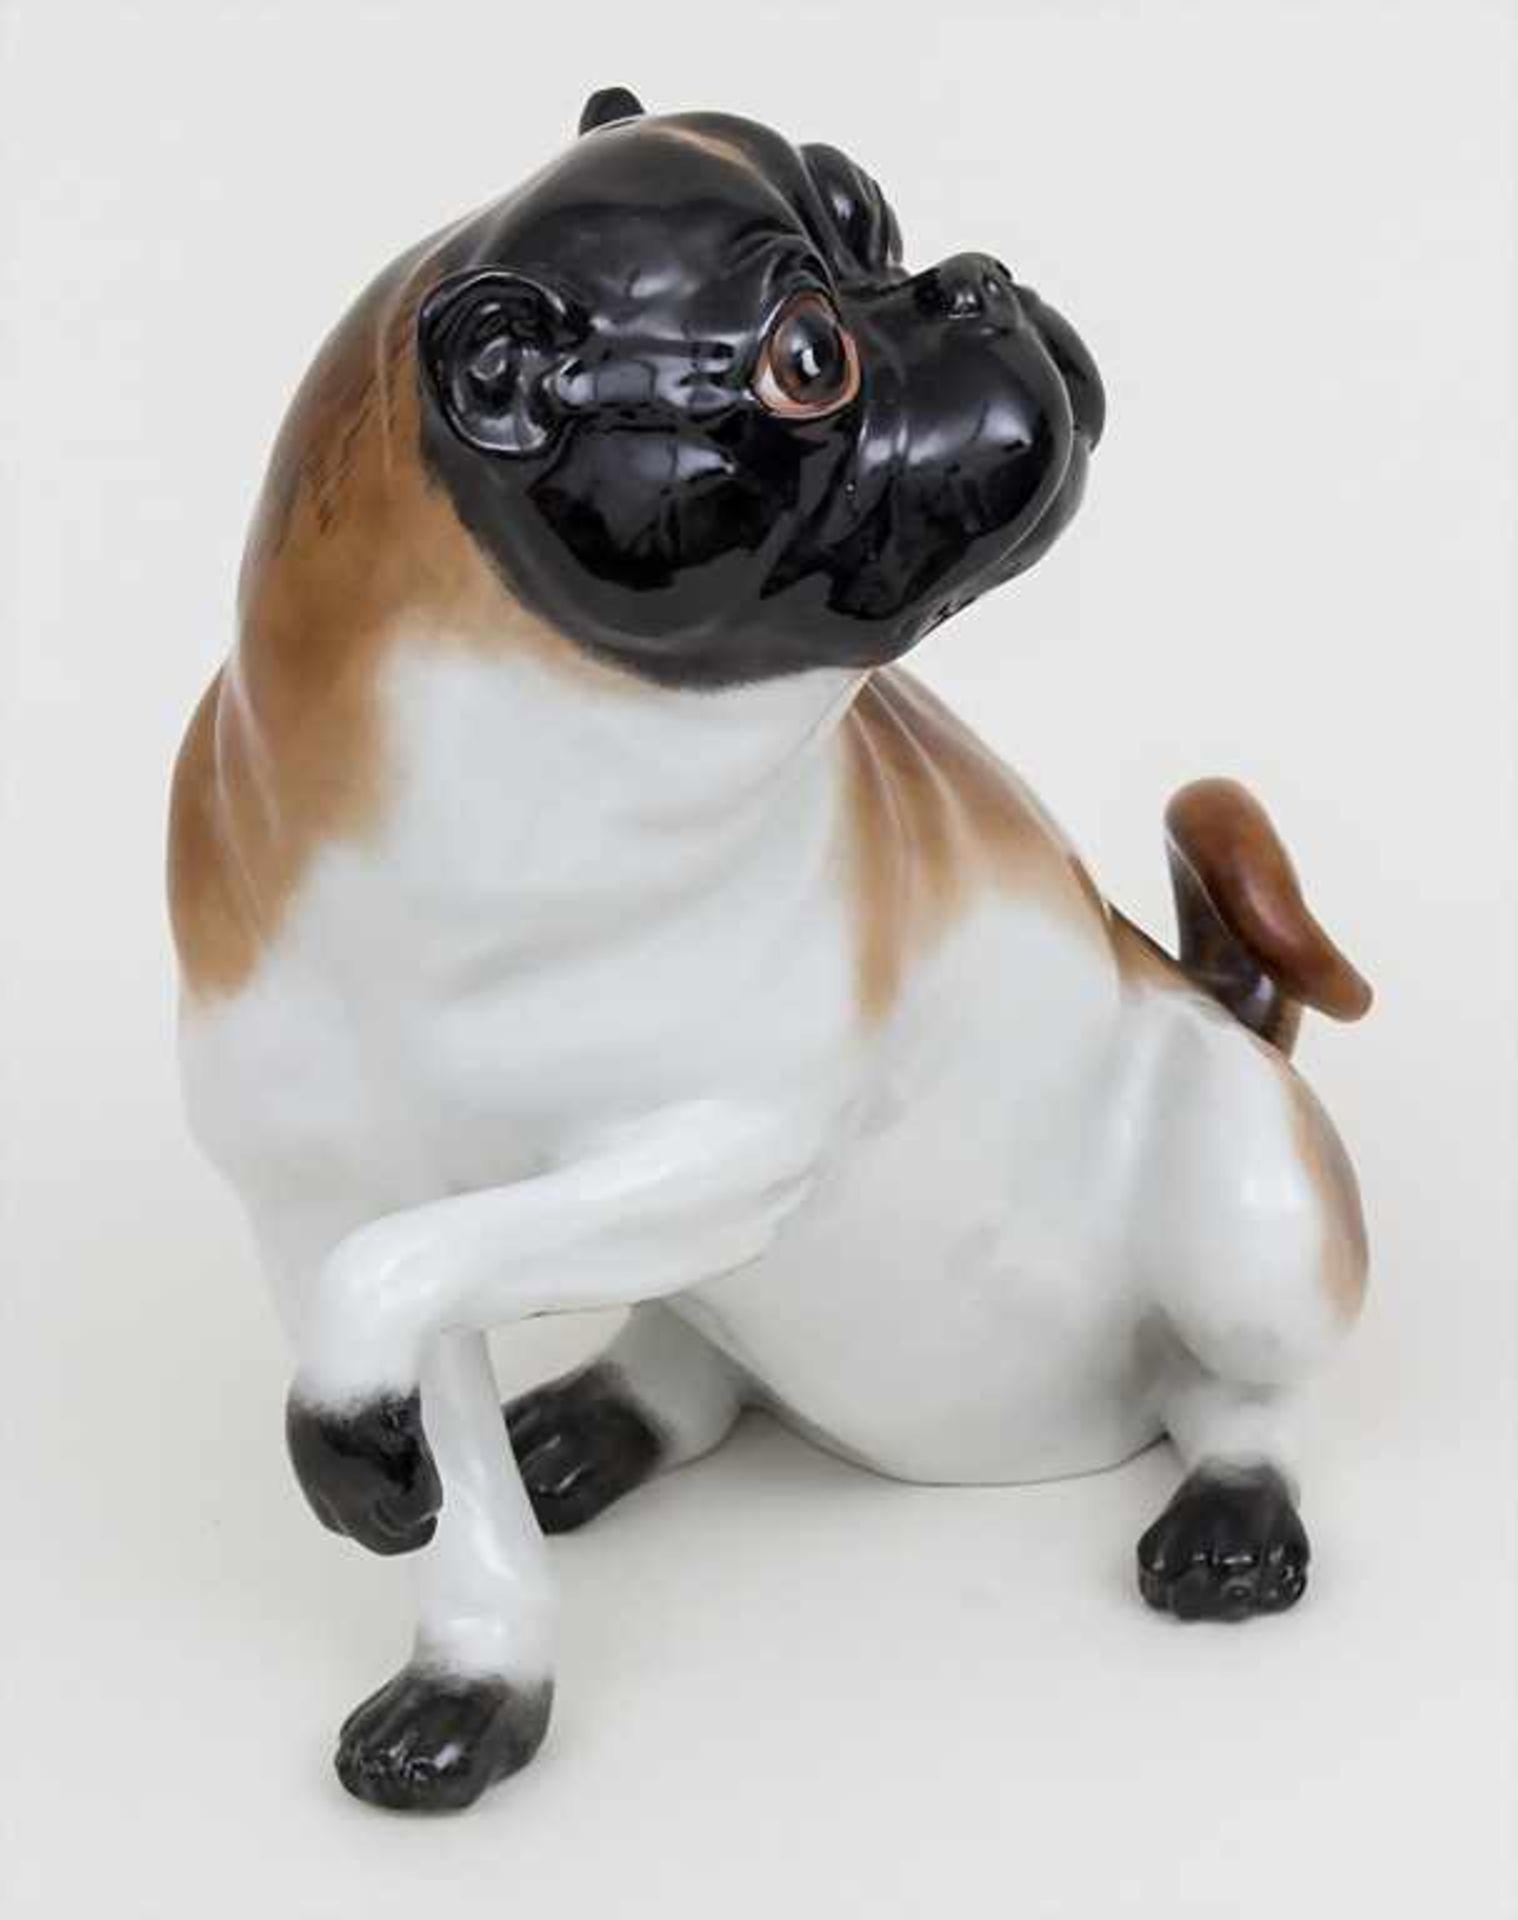 Sitzender Mops / A sitting pug dog, wohl Carl Thieme, Potschappel, 20. Jh. Material: Porzellan, - Image 2 of 4